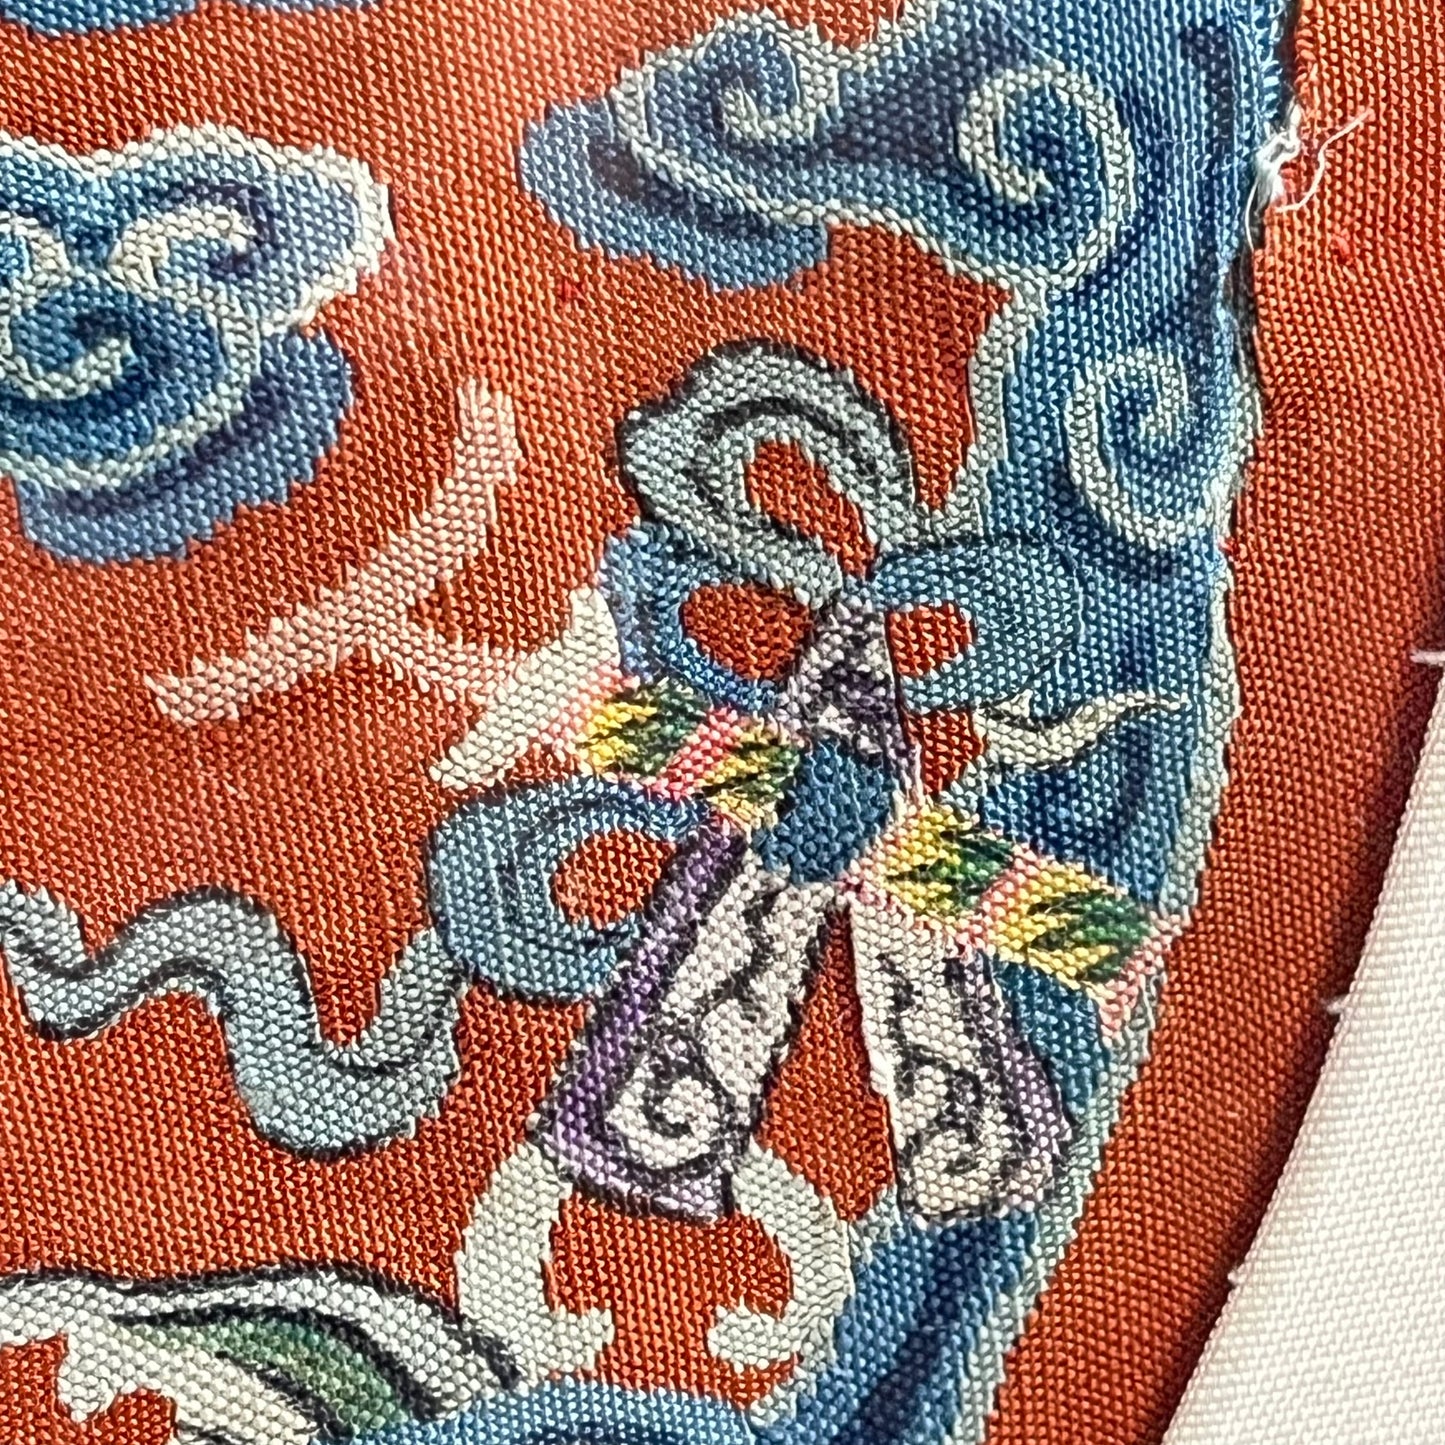 Framed Chinese Silk Wedding Emboidery Roundel (c.1900) 22"